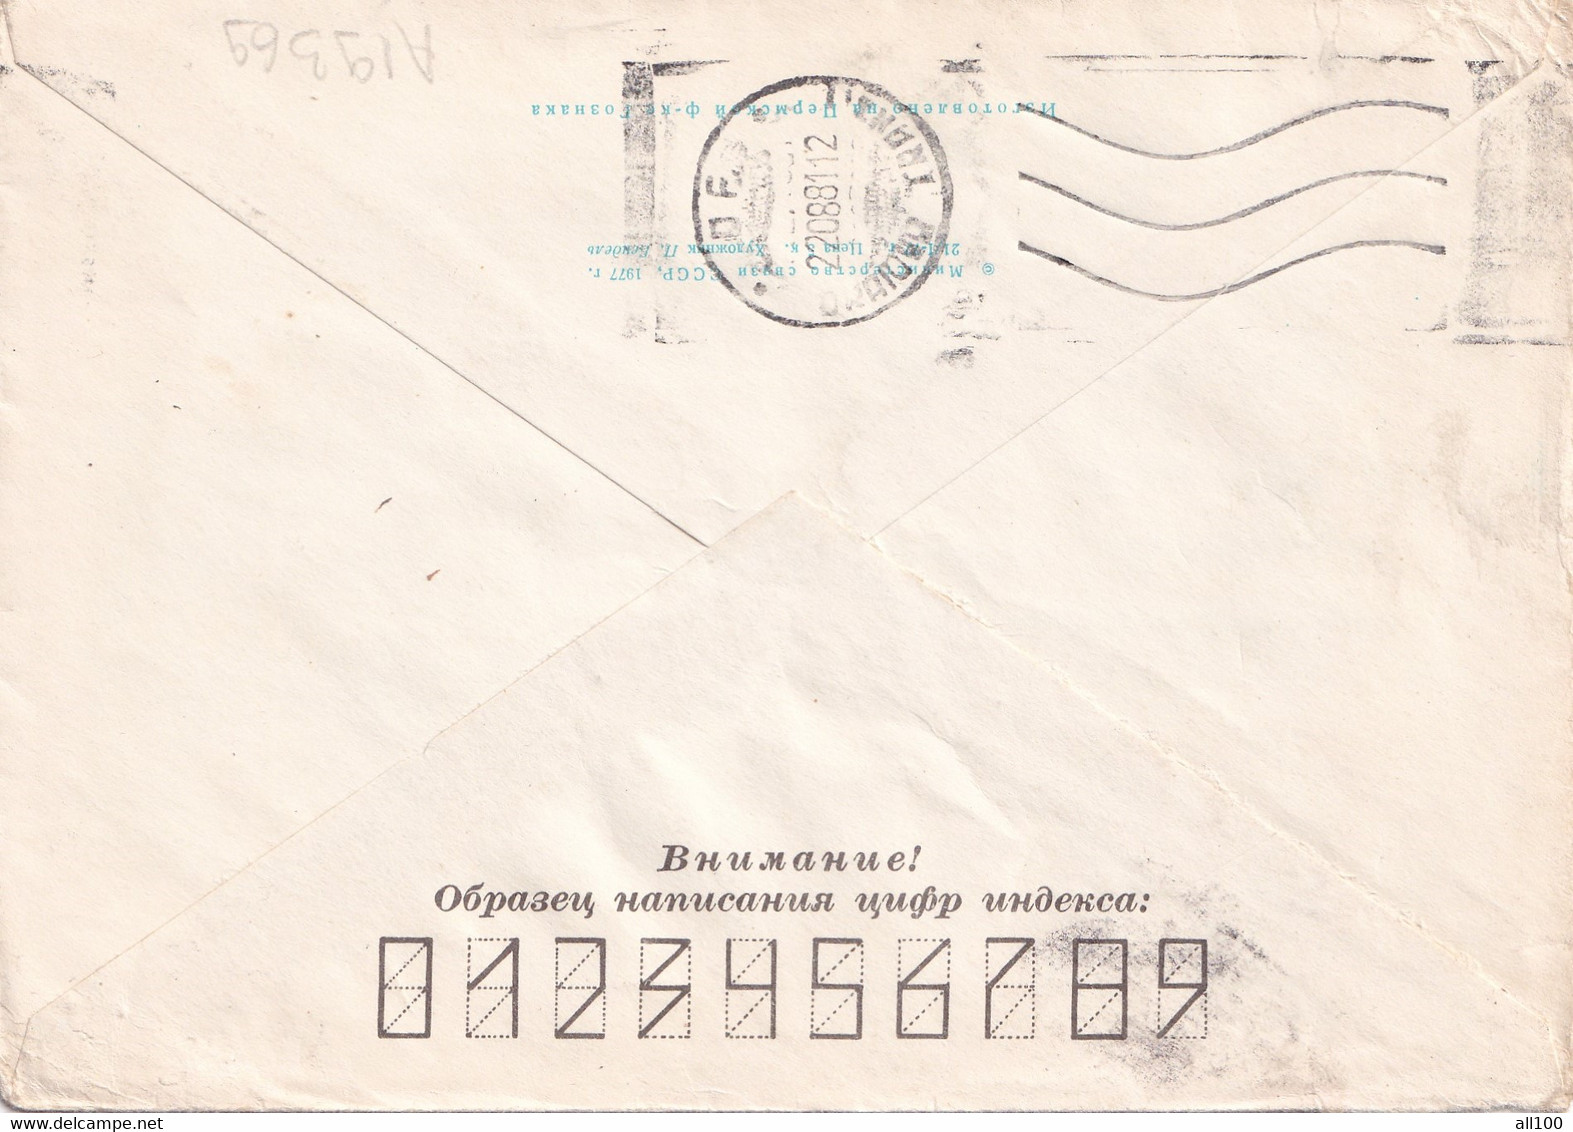 A19369 - A S NOVIKOV RUSSIAN SOVIET WRITER COVER ENVELOPE USED 1981 SOVIET UNION USSR SENT TO CRAIOVA ROMANIA RSR - Storia Postale